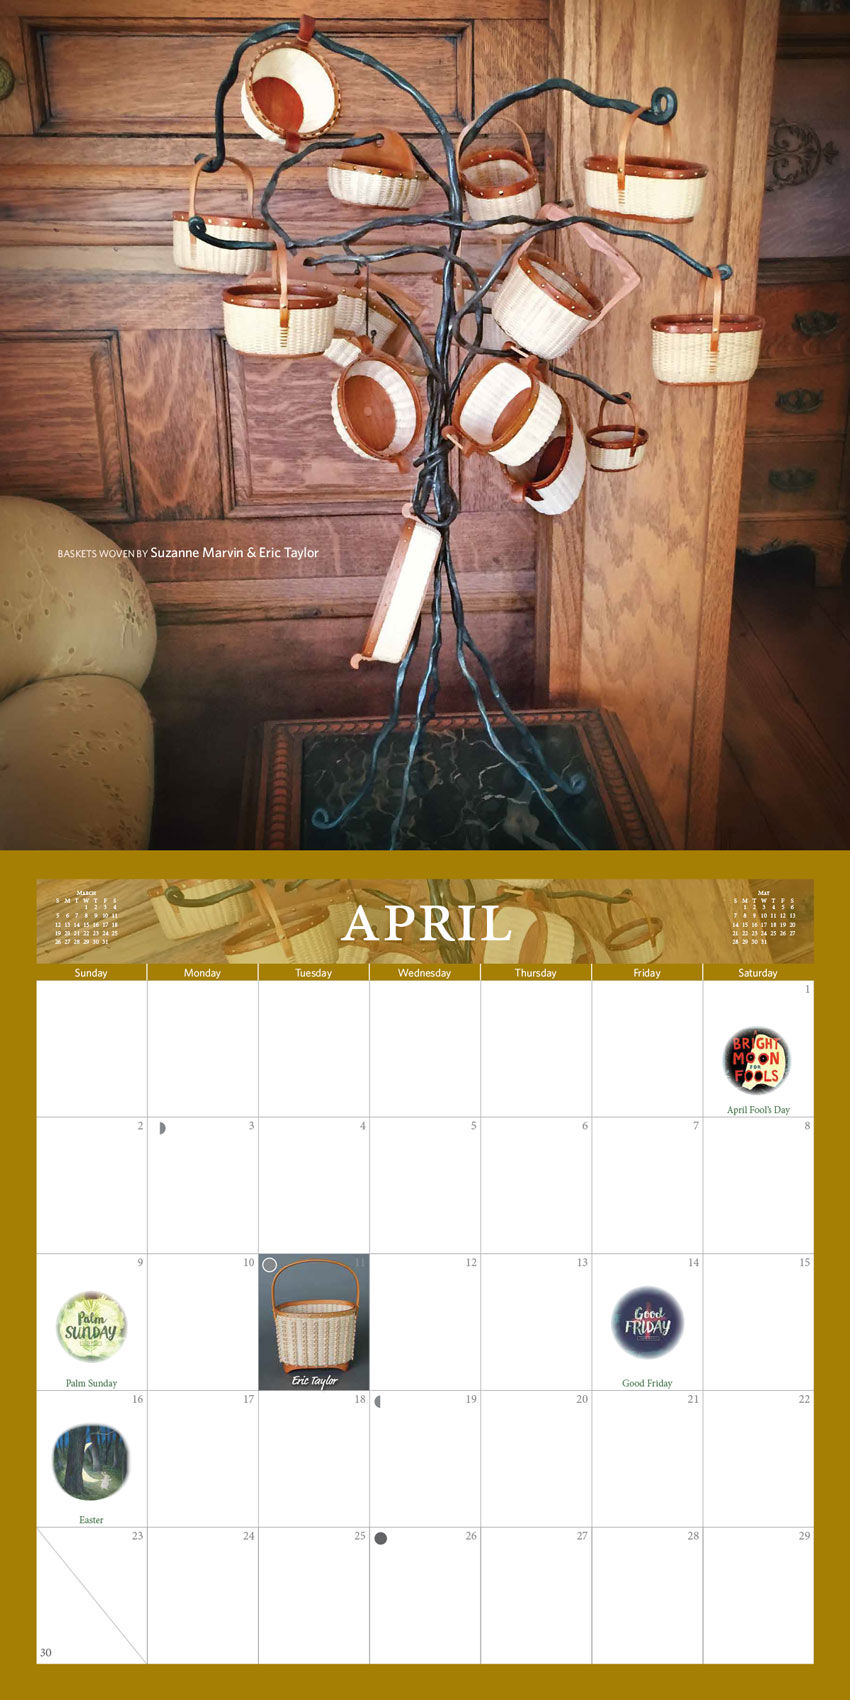 April’s Calendar Girl: Suzanne of the Basket Cottage